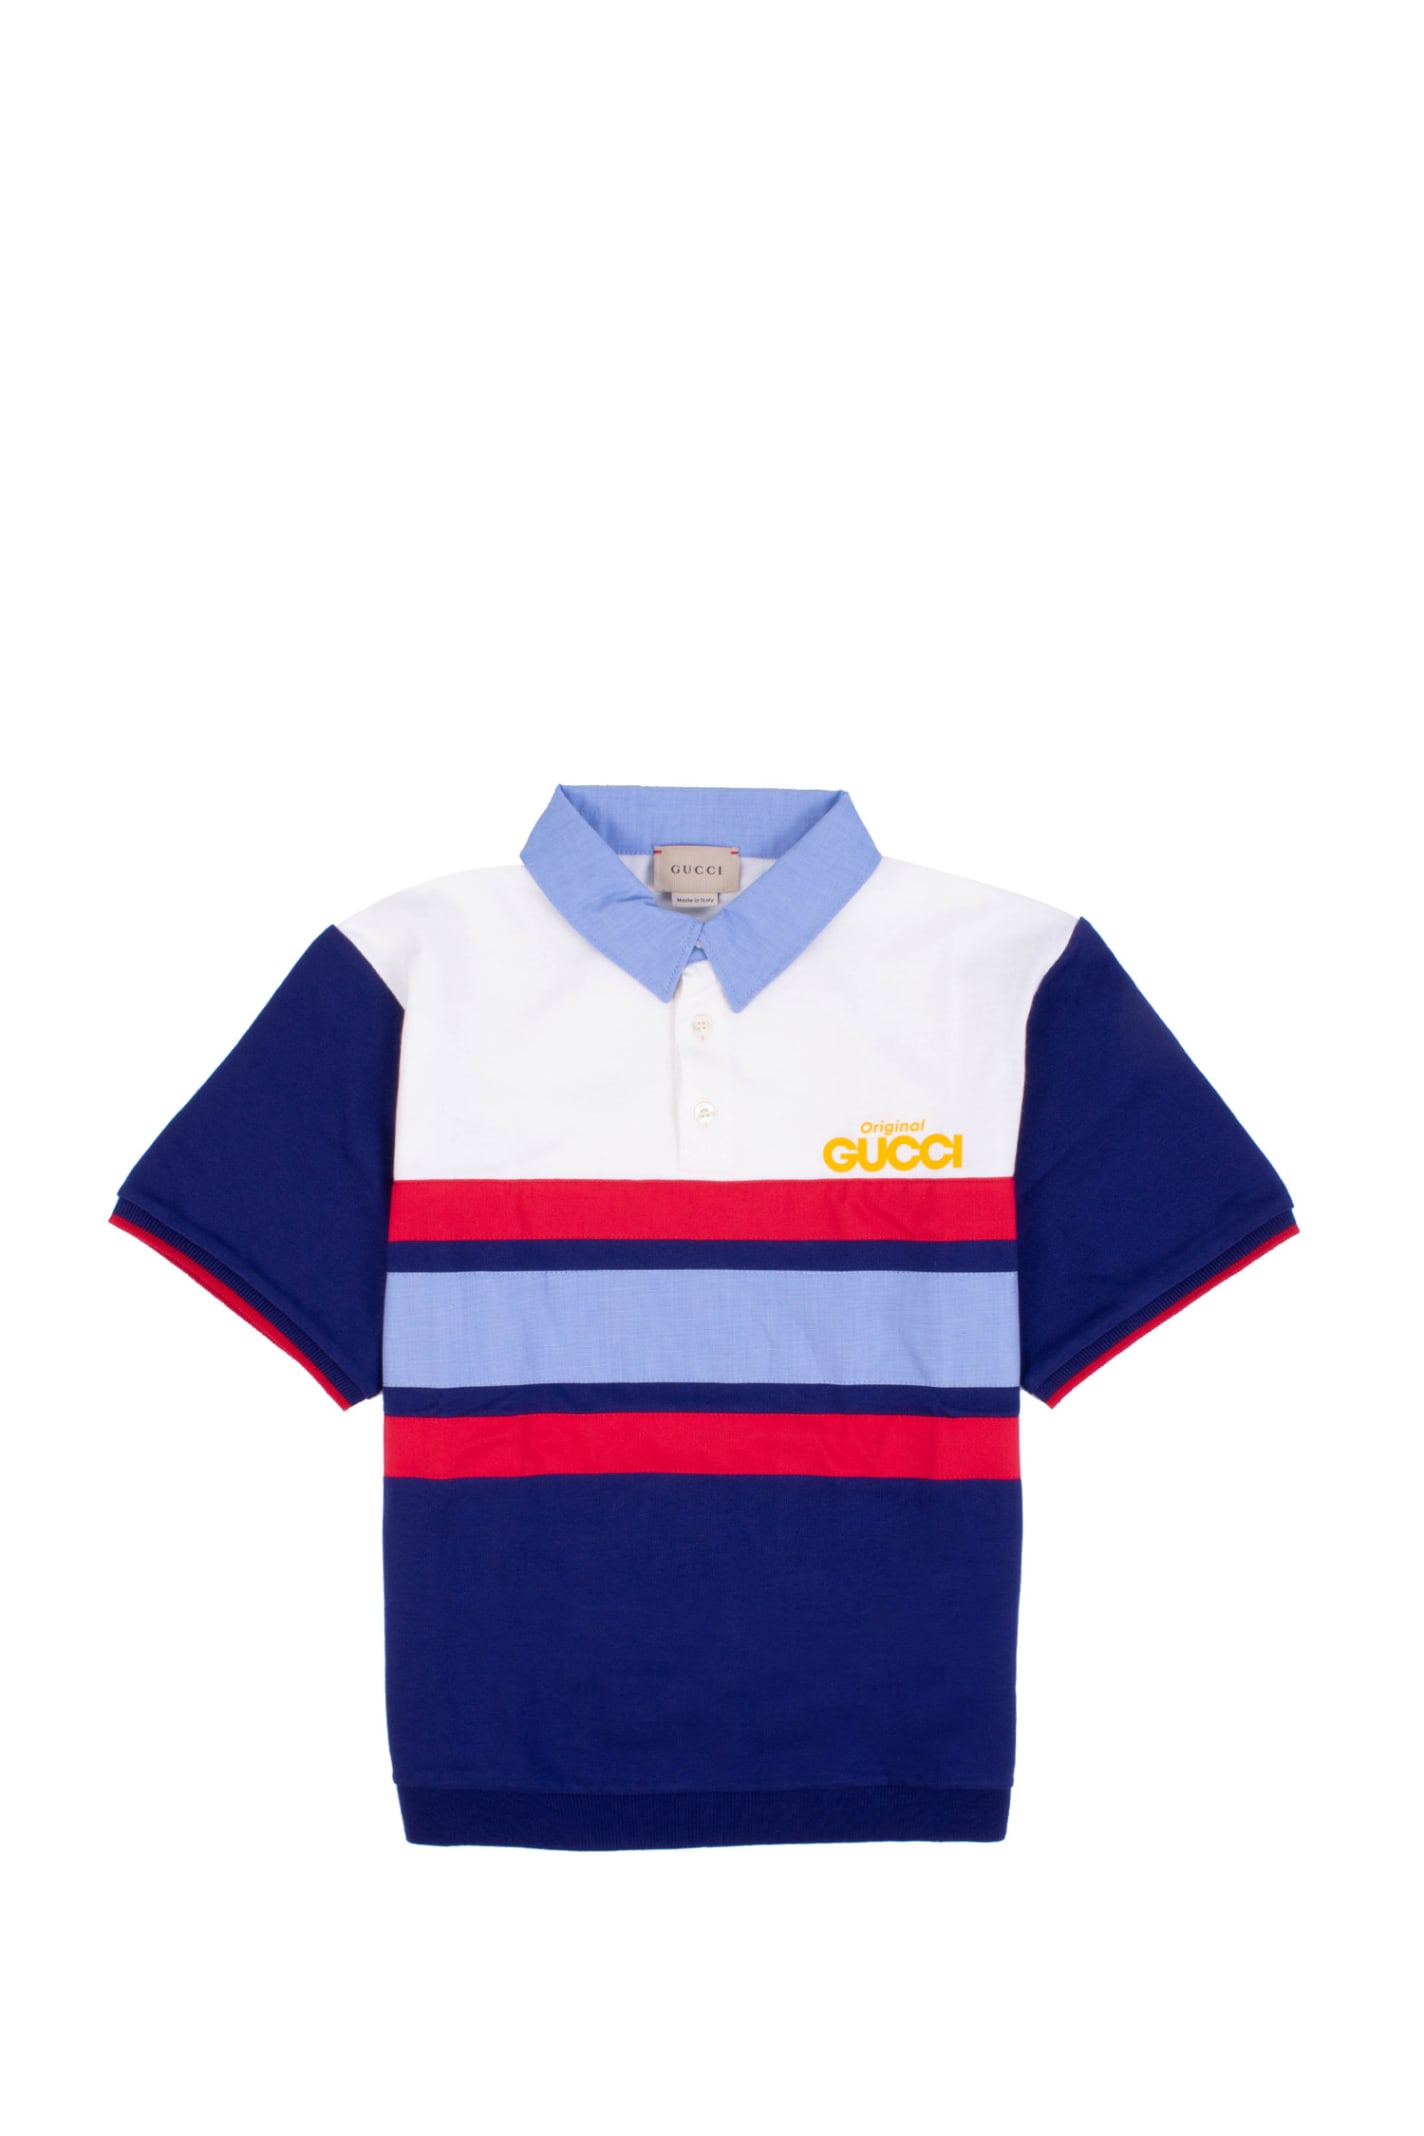 Gucci Original Cotton Polo Shirt